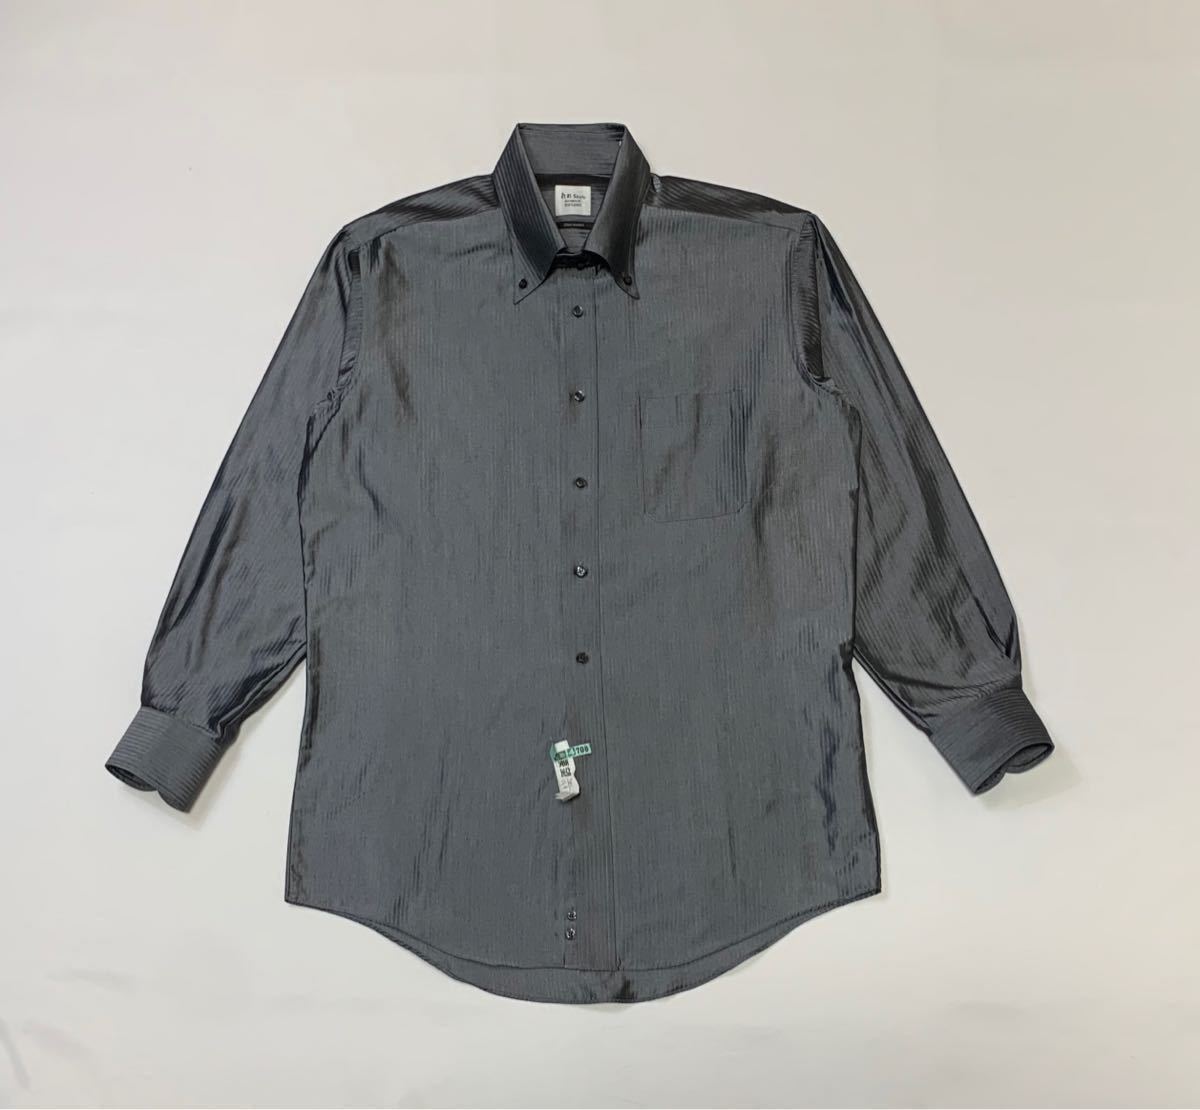 hiromichi nakano // Slim model 形態安定 長袖 ヘンリーボーンストライプ柄 ボタンダウン シャツ・ワイシャツ・サイズ 43-84 (LL)の画像1